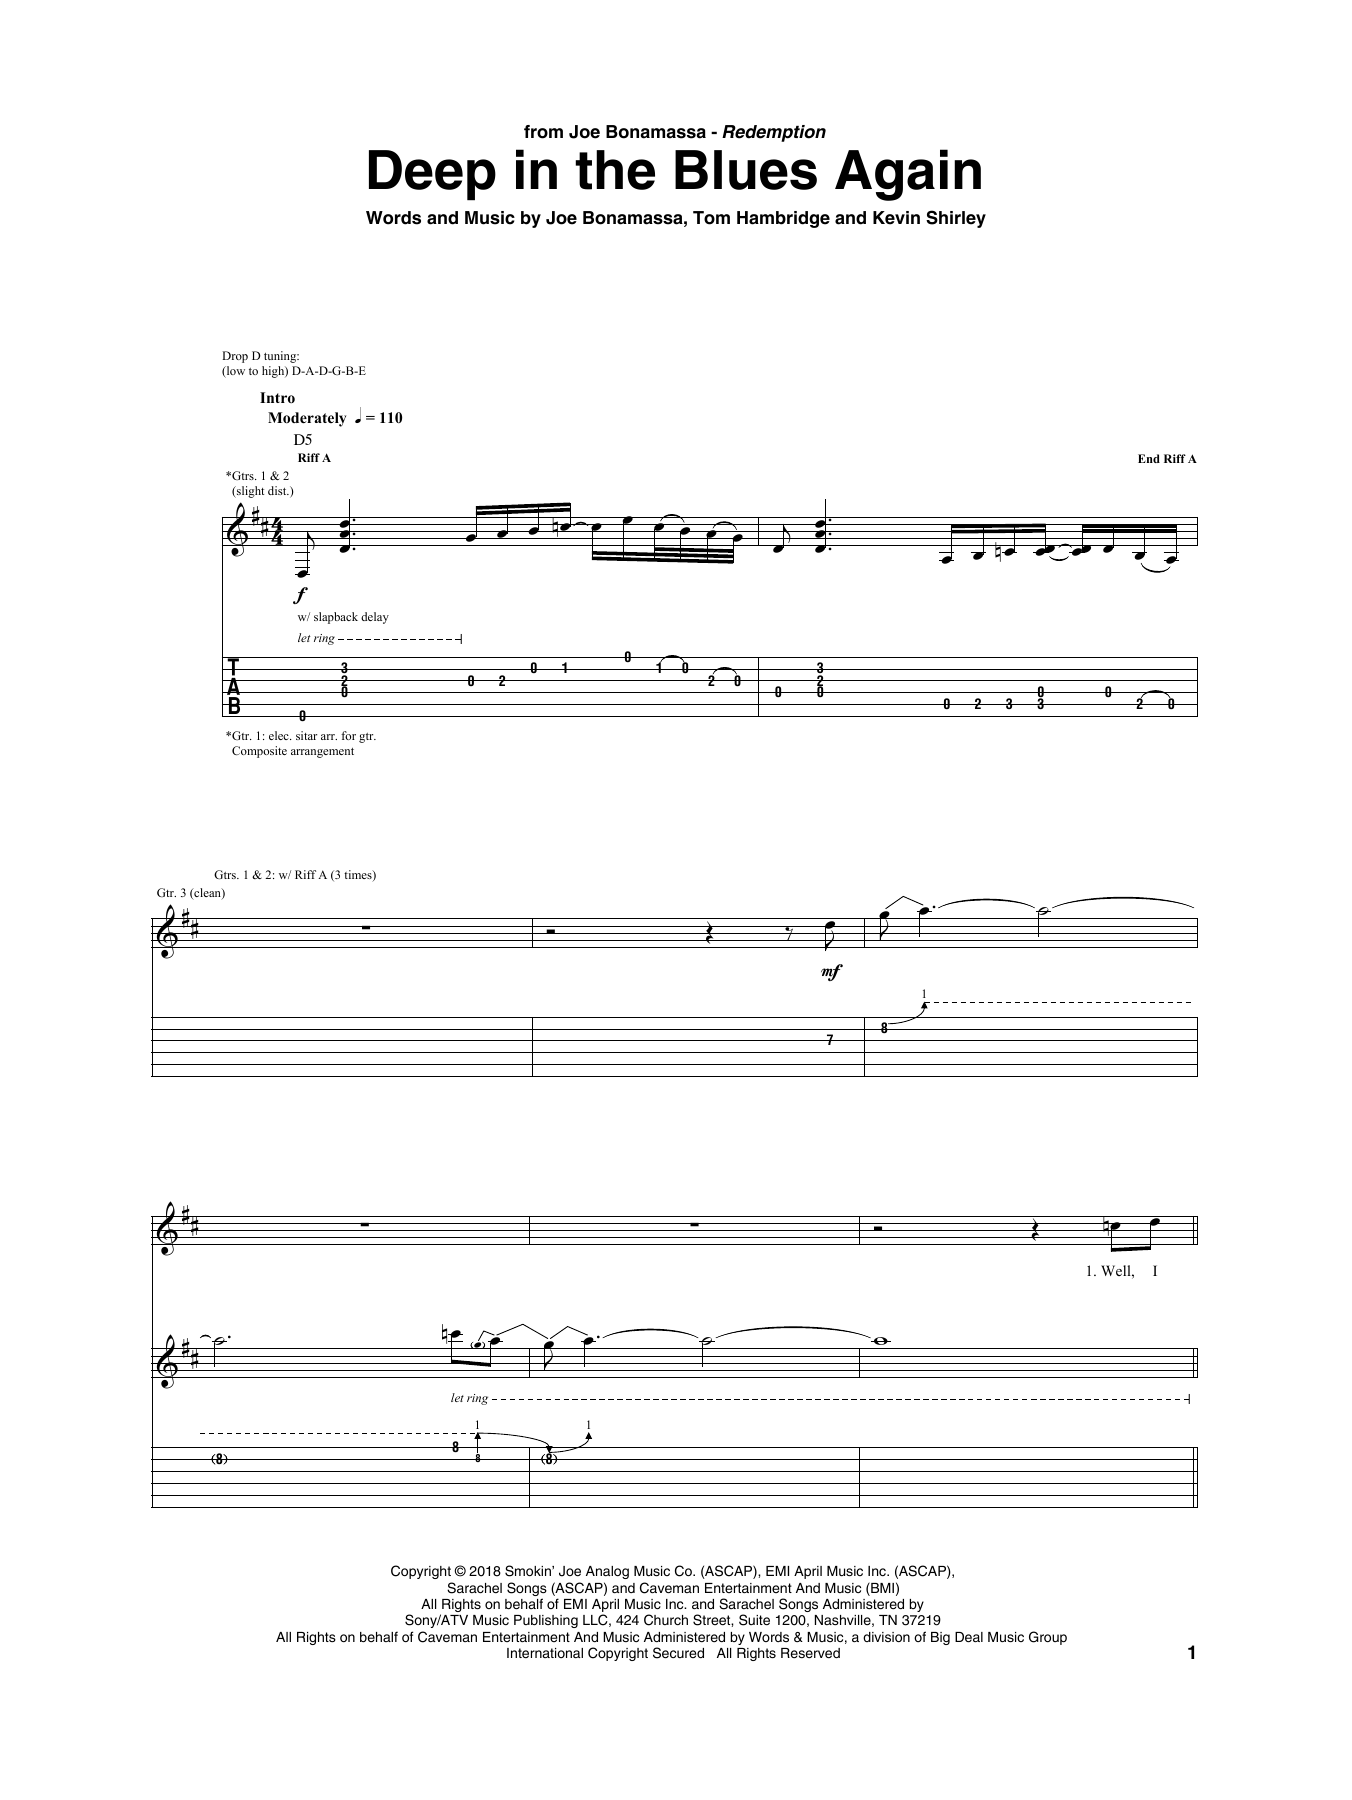 Download Joe Bonamassa Deep In The Blues Again Sheet Music and learn how to play Guitar Tab PDF digital score in minutes